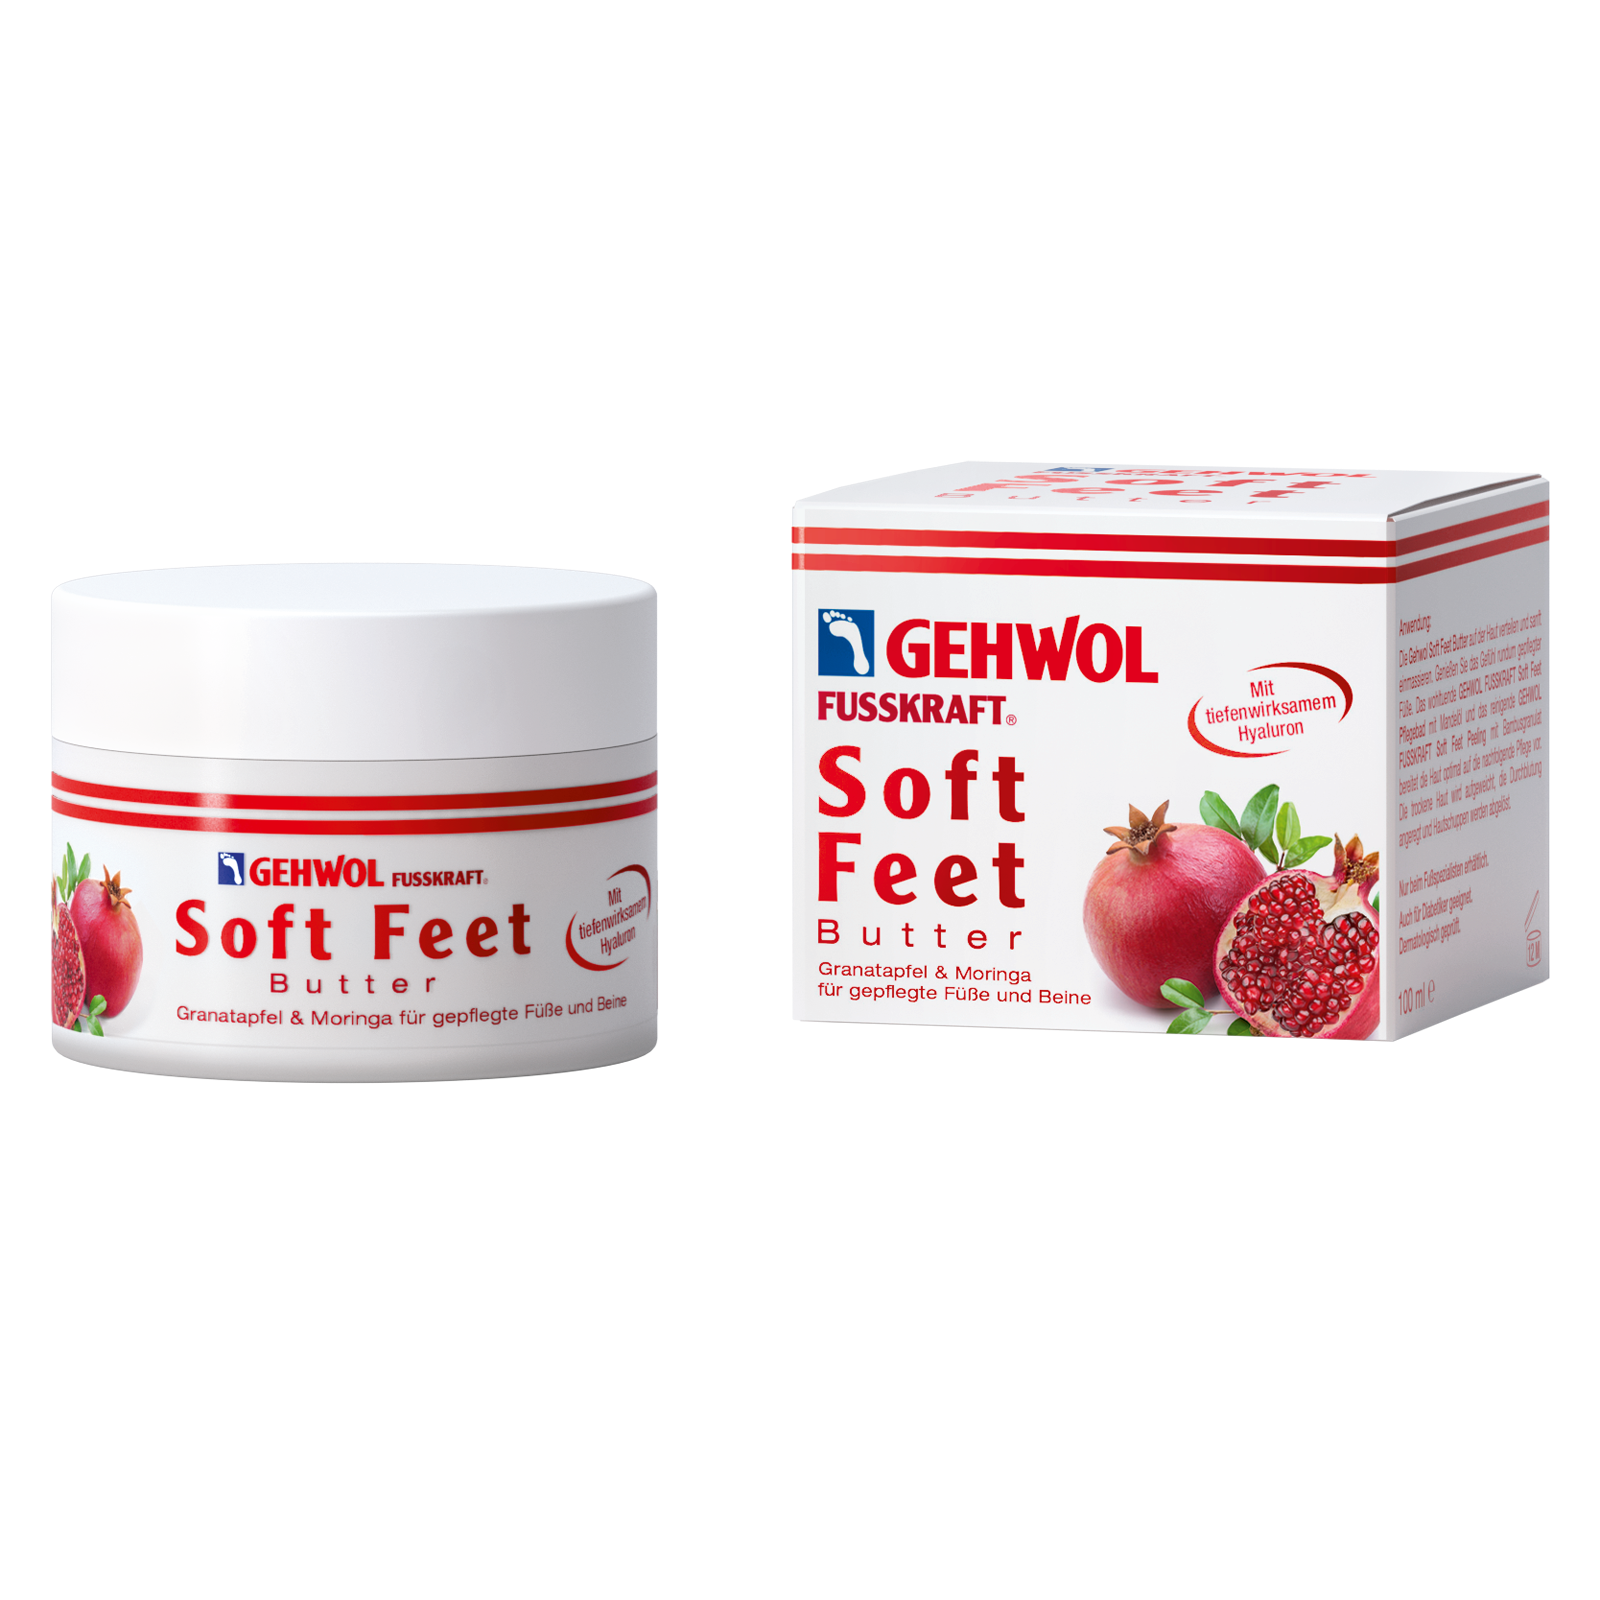 GEHWOL FUSSKRAFT Soft Feet Butter Granatapfel & Moringa | 100 ml